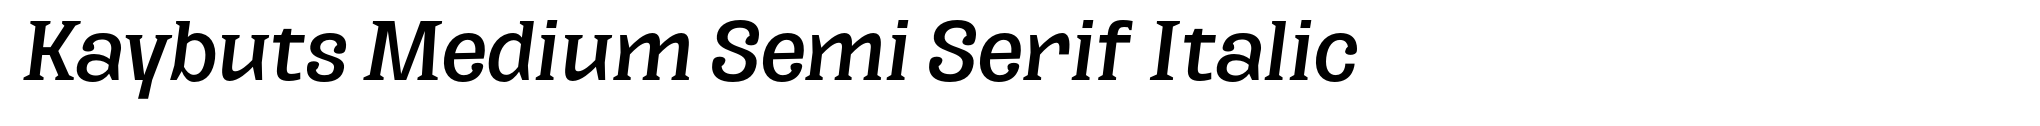 Kaybuts Medium Semi Serif Italic image